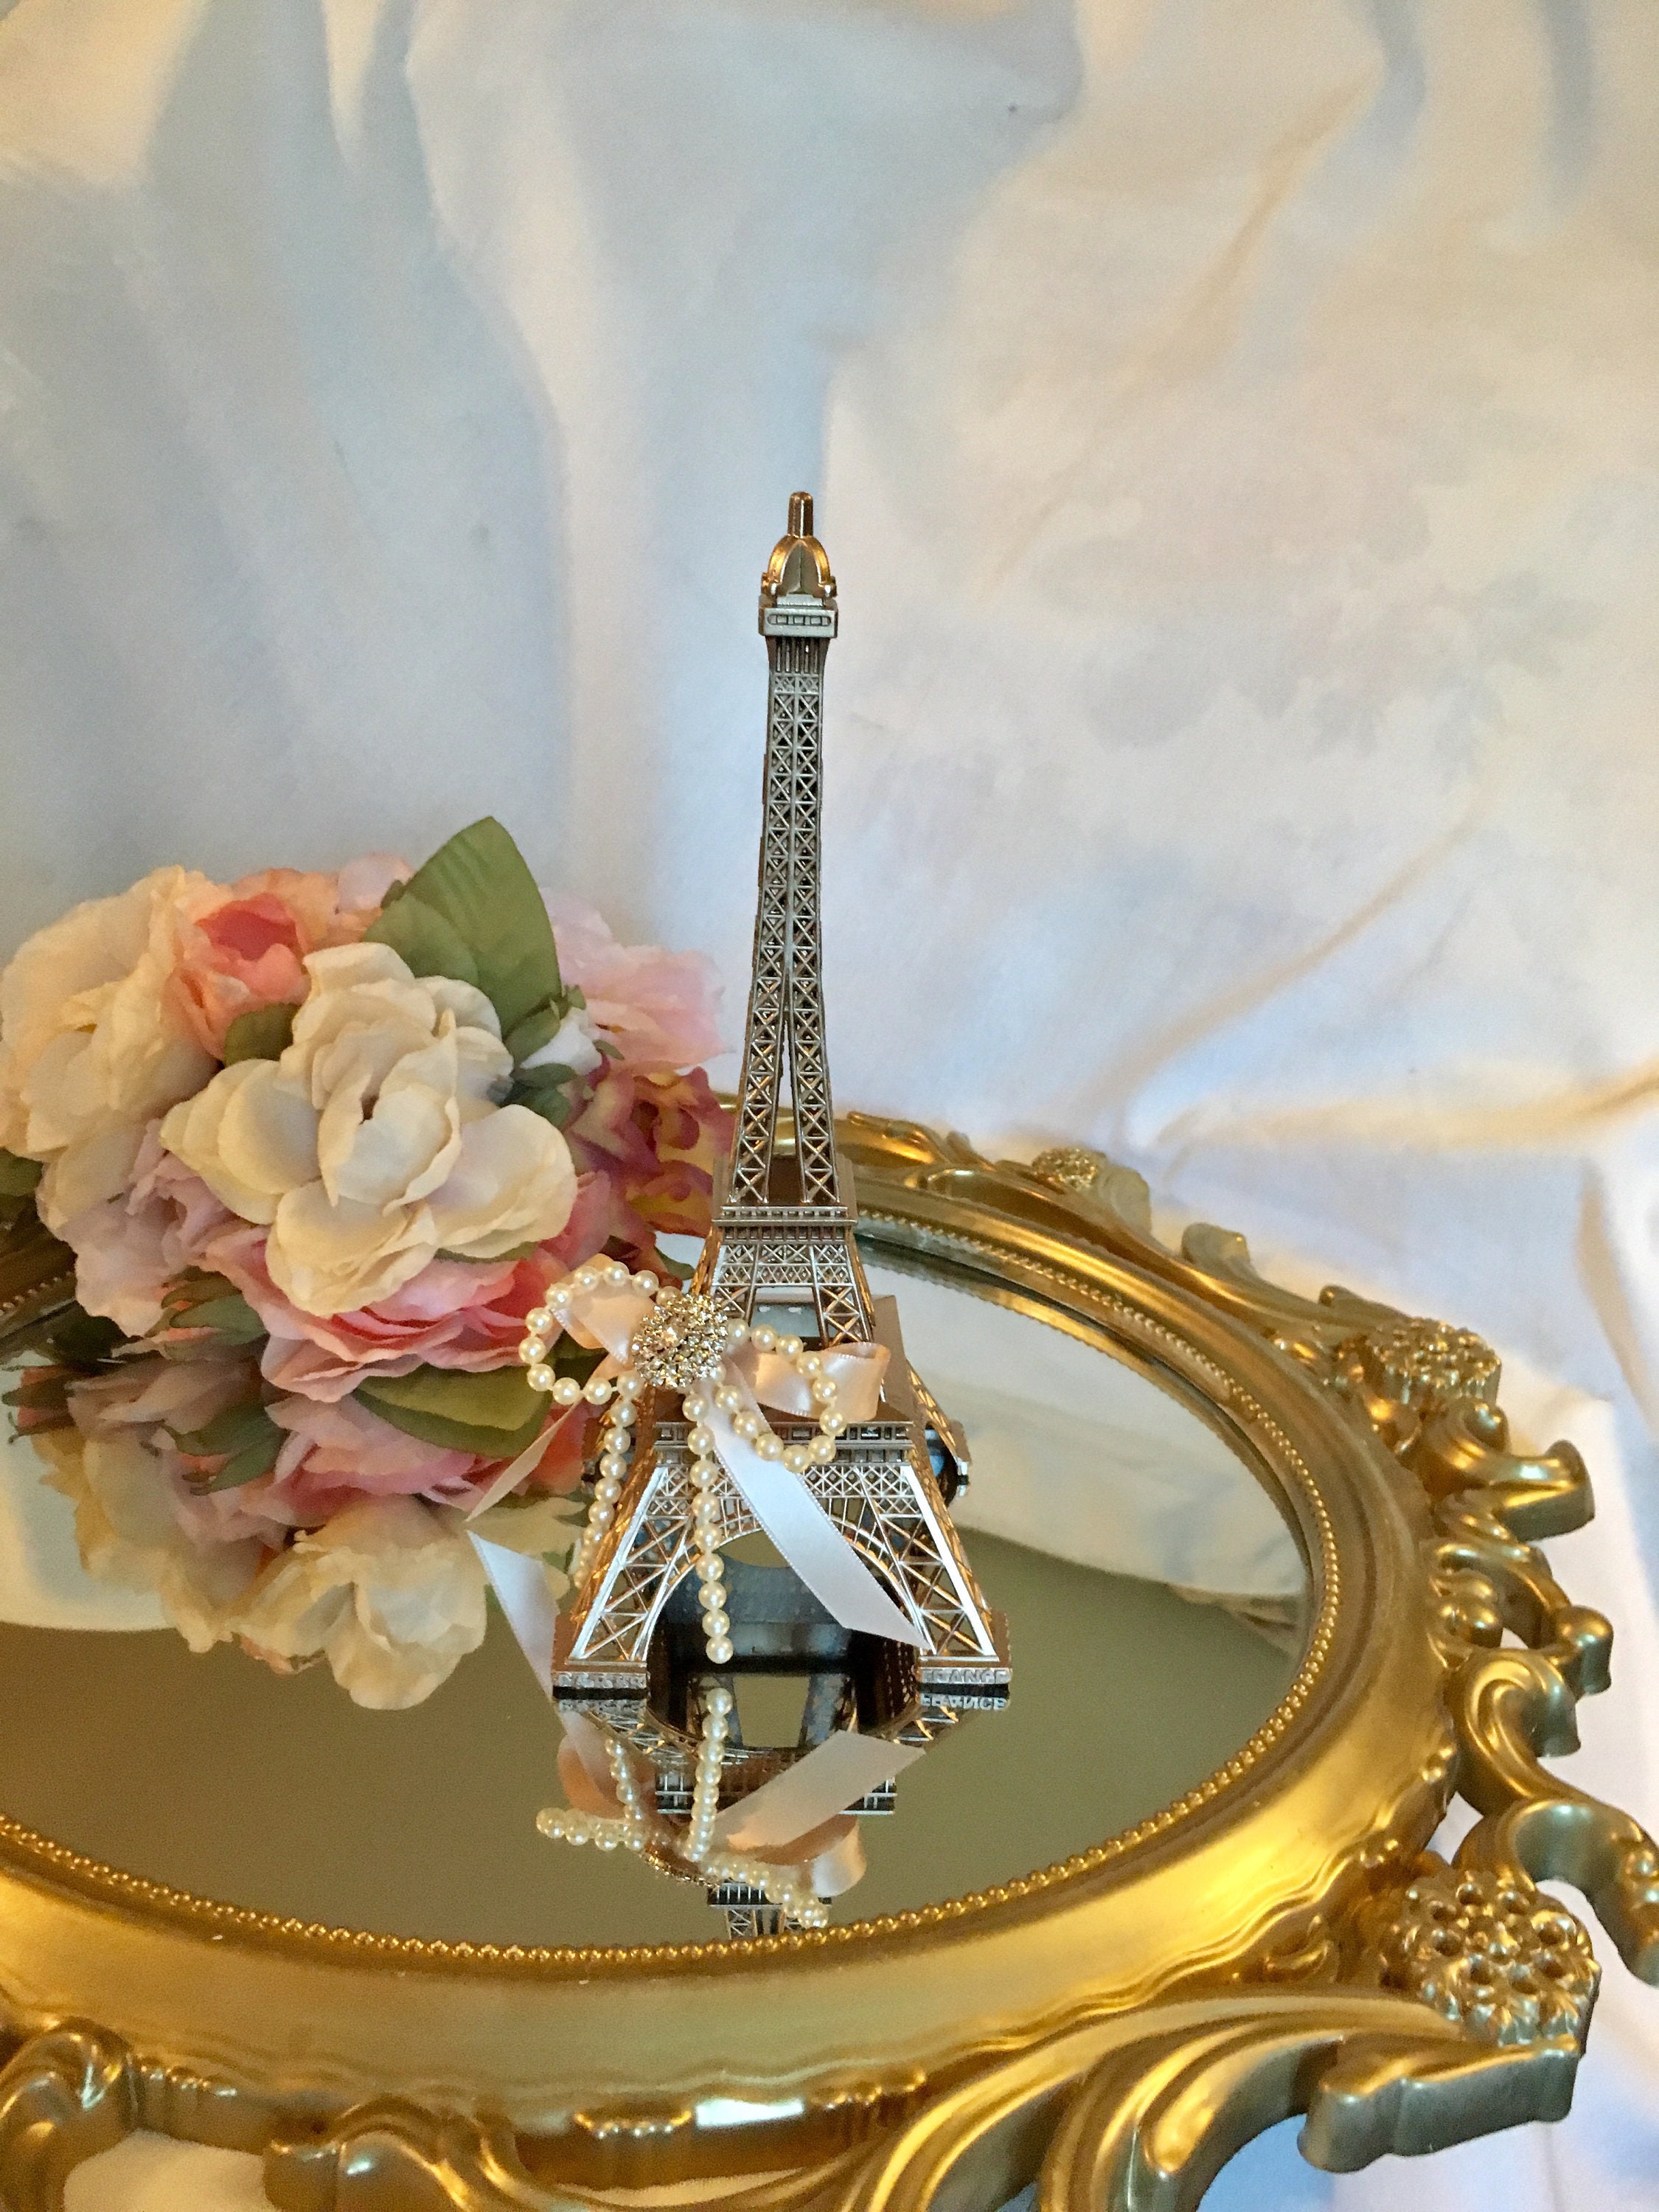 12pc Wedding Eiffel Tower vase Centerpiece Decorations Clear White